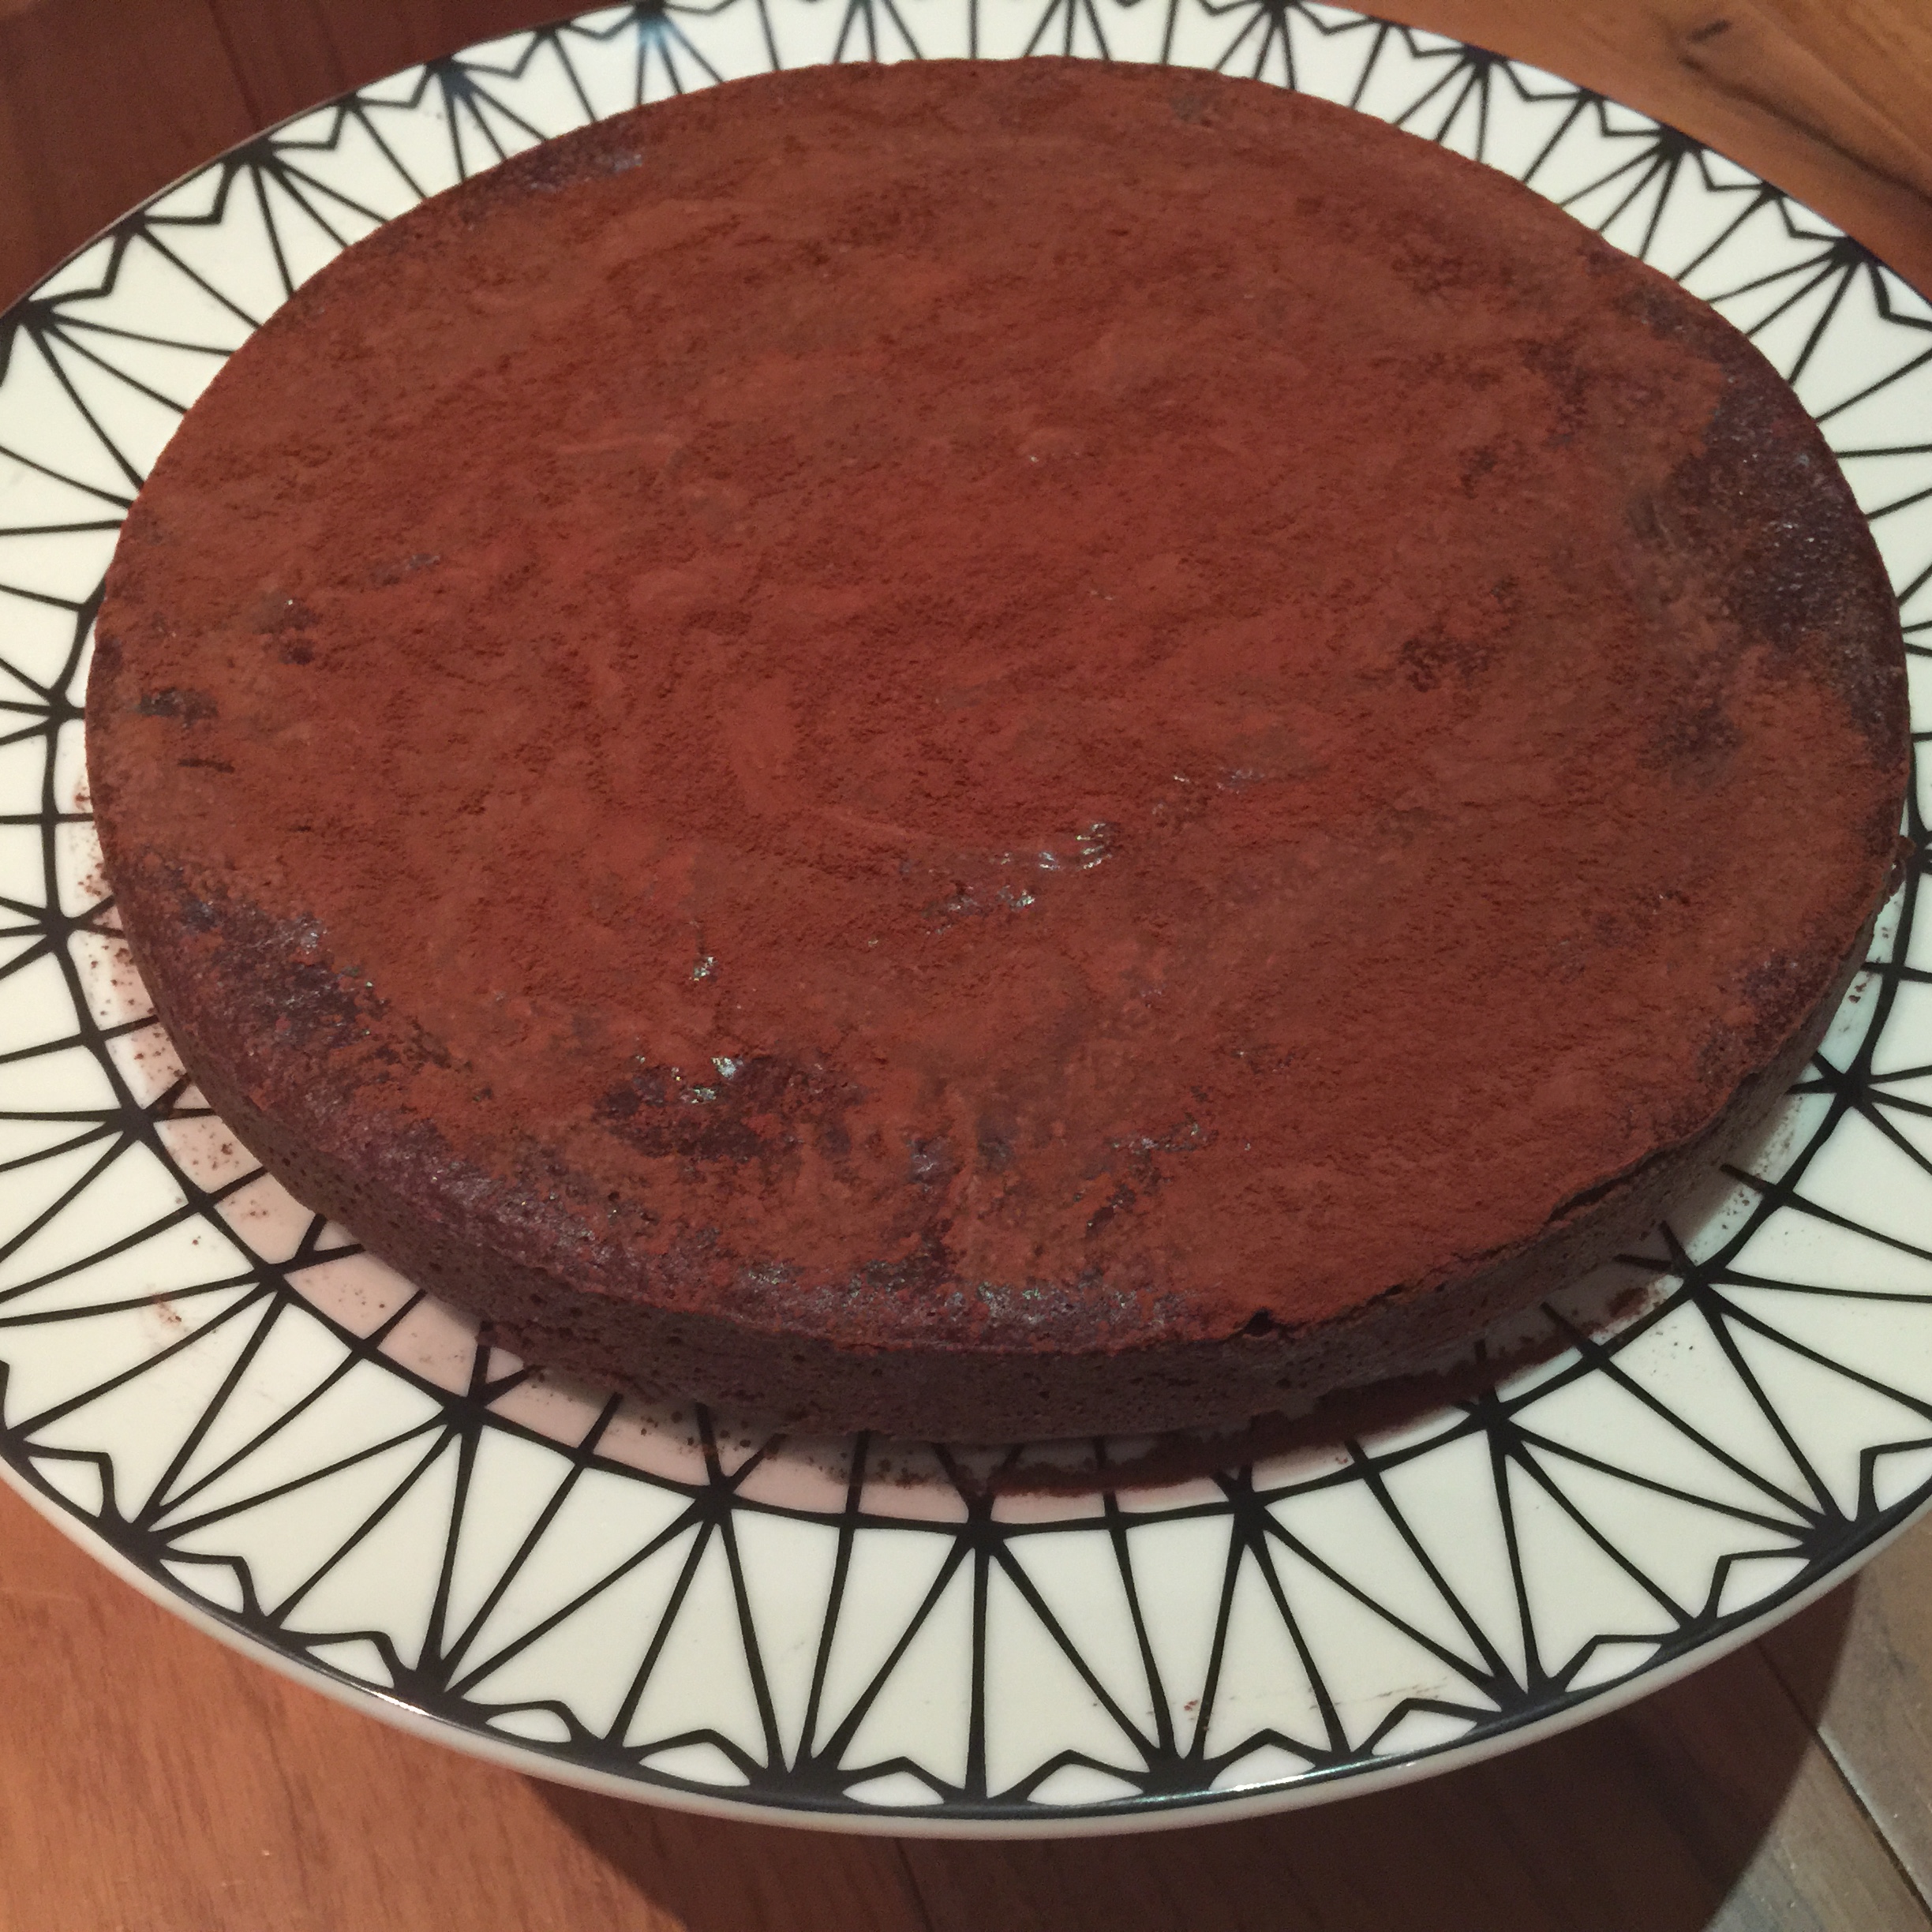 Dark Chocolate & Almond Cake